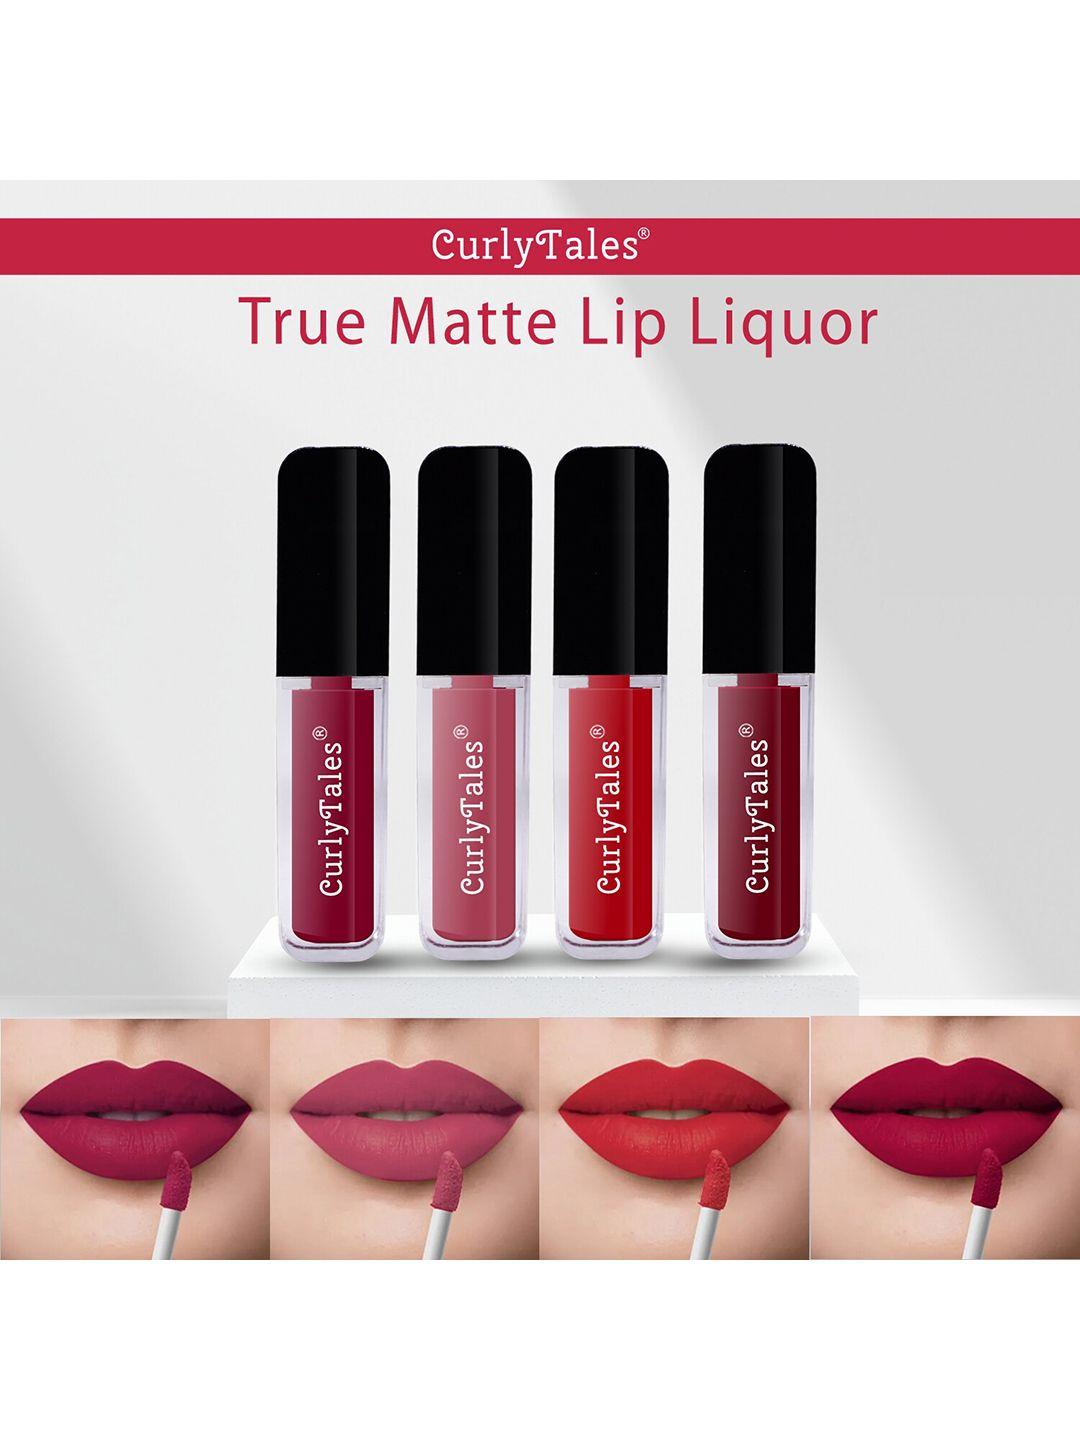 curlytales set of 4 true matte vegan long lasting liquid lipstick with vit e - 4 ml each